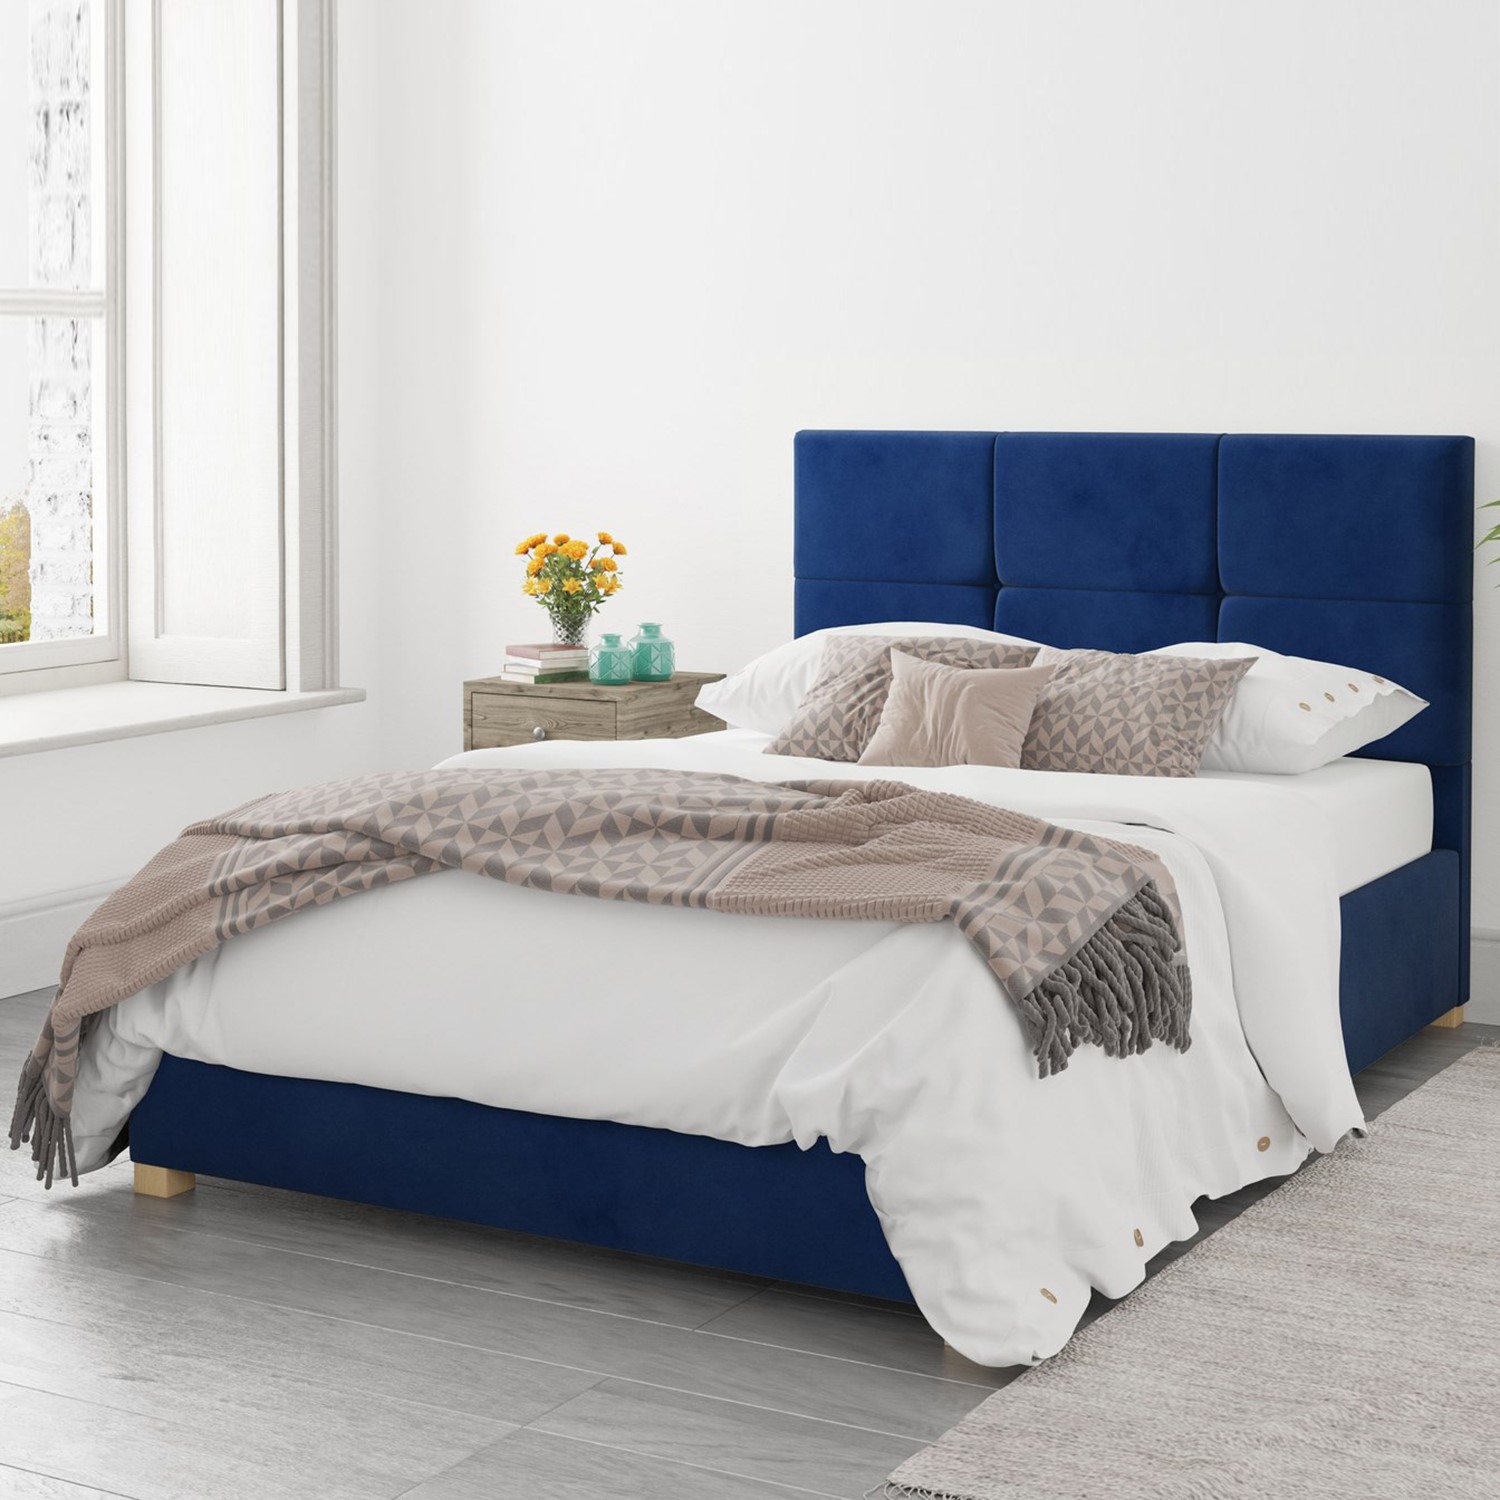 Read more about Navy blue velvet double ottoman bed farringdon aspire